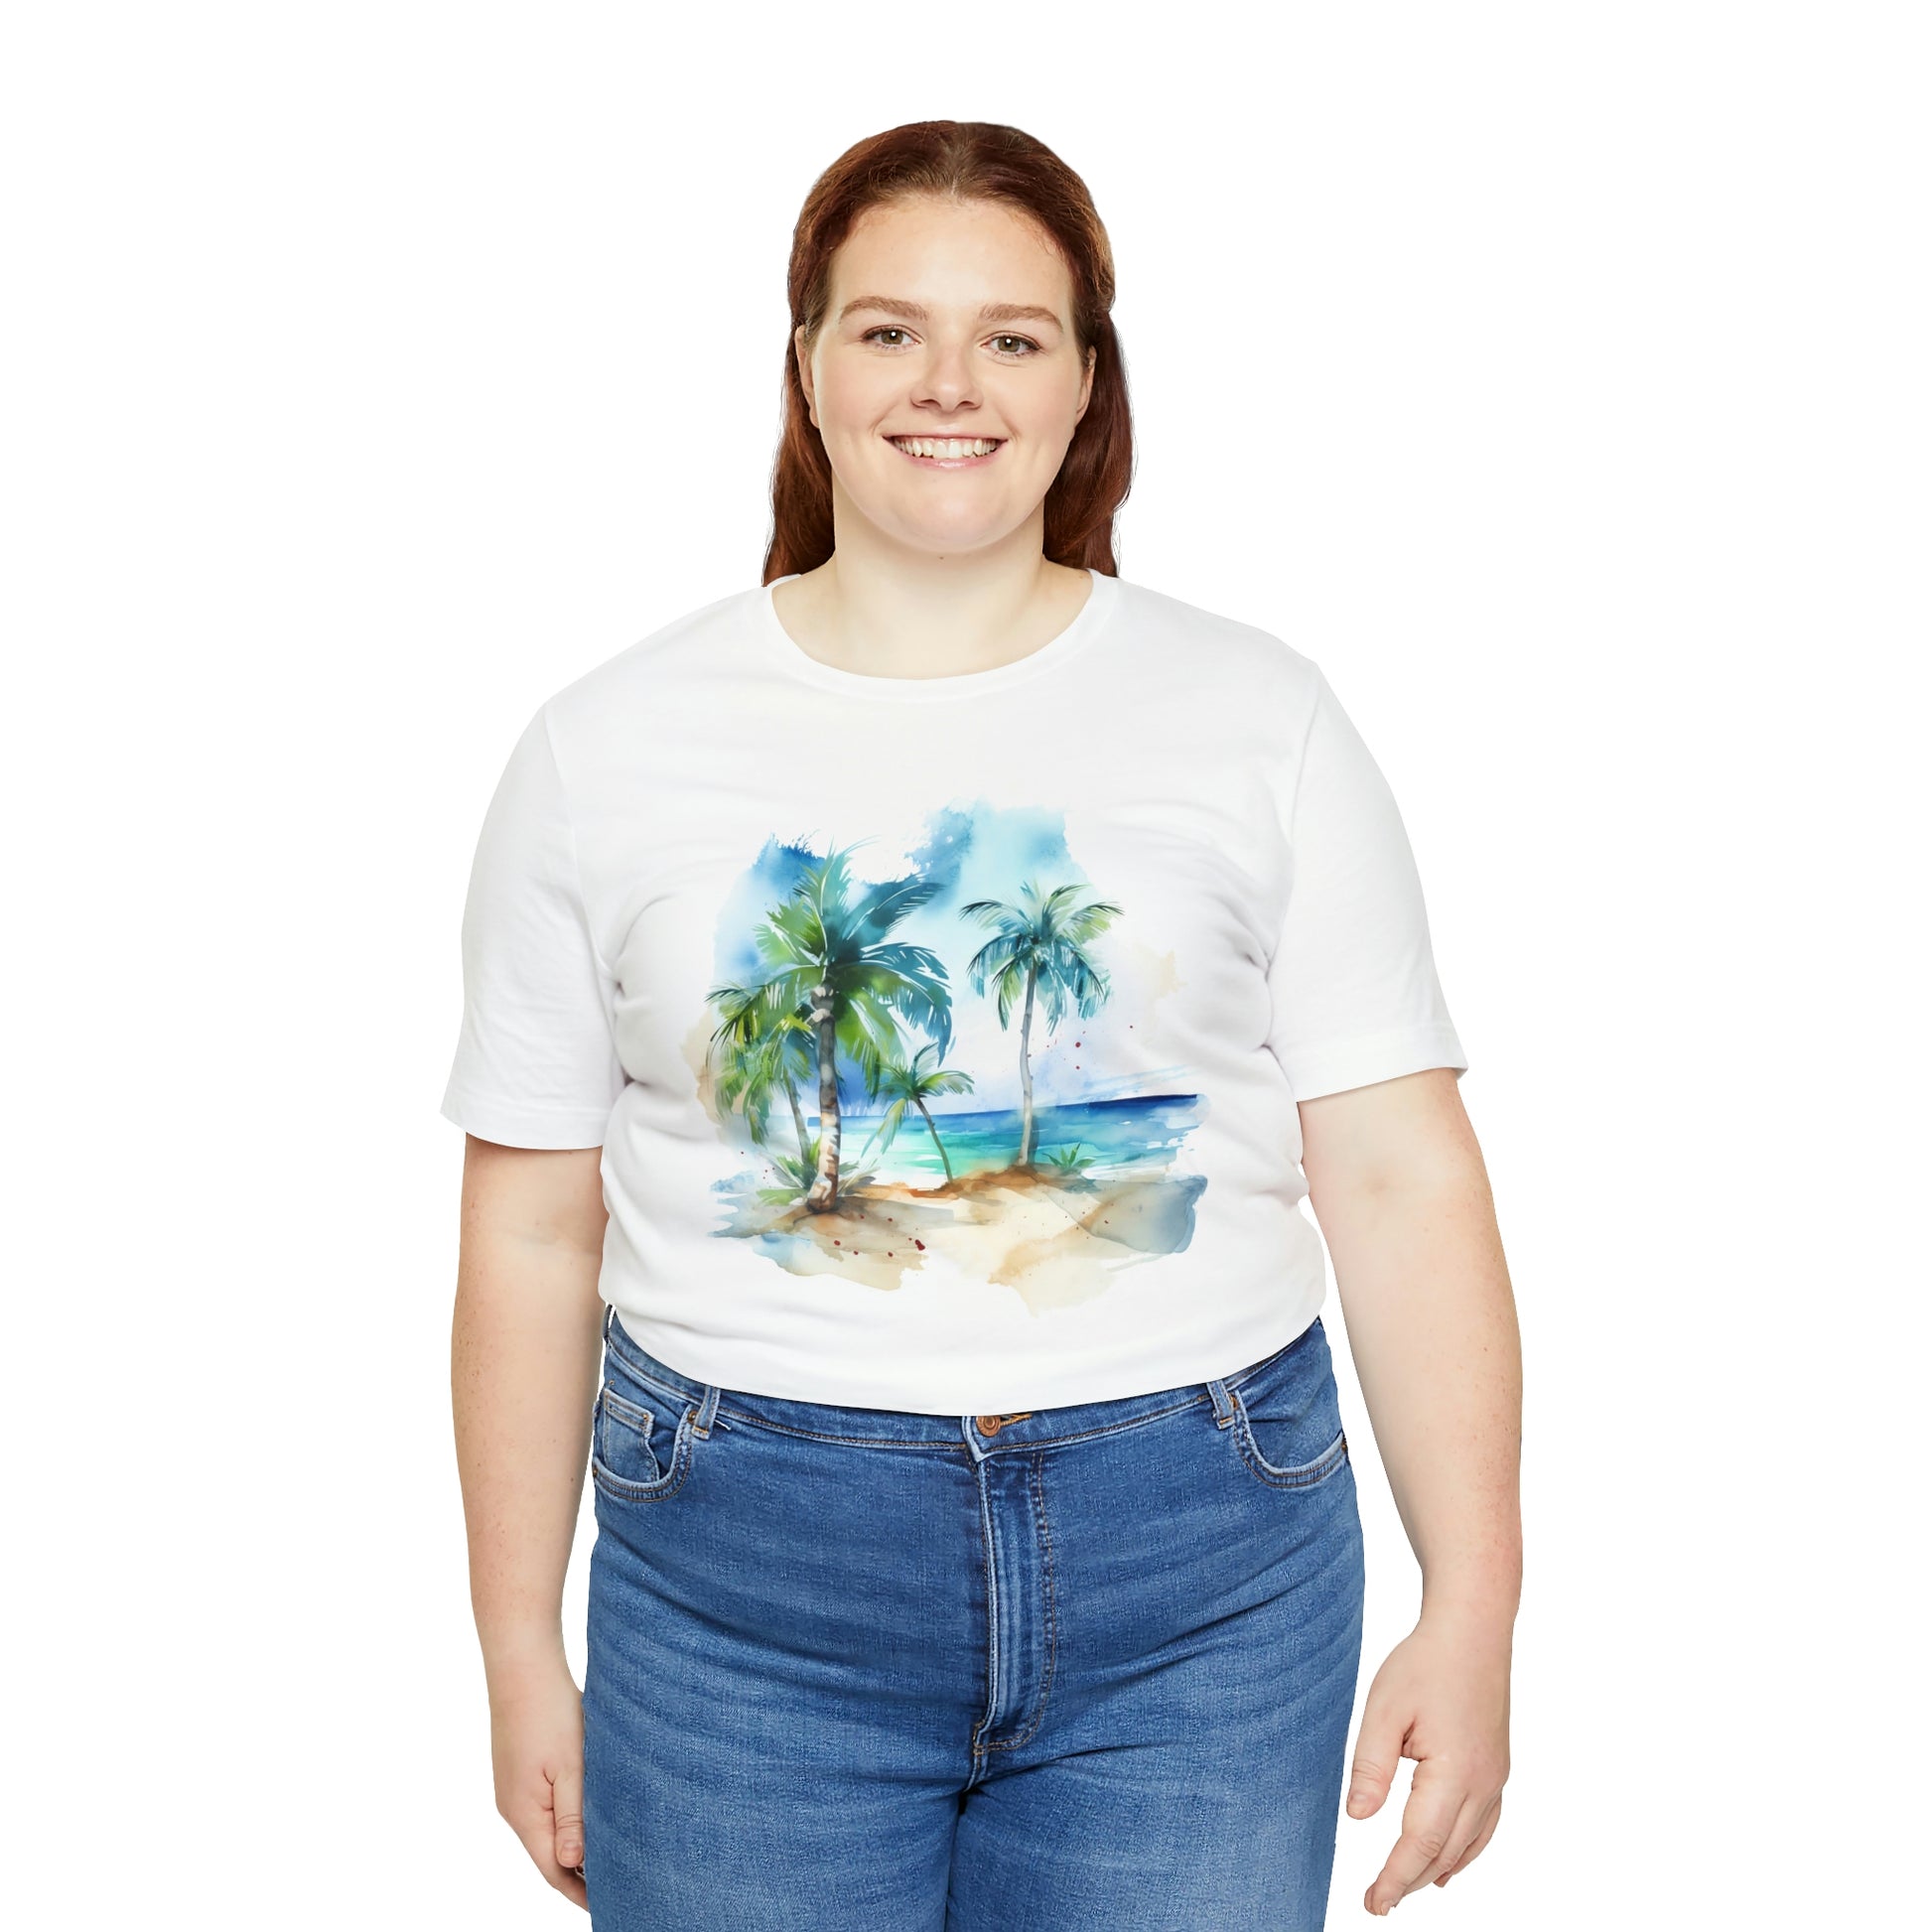 Beach Tshirt, Palm Trees Caribbean Watercolor Designer Graphic Aesthetic Crewneck Men Women Tee Top Short Sleeve Shirt Starcove Fashion